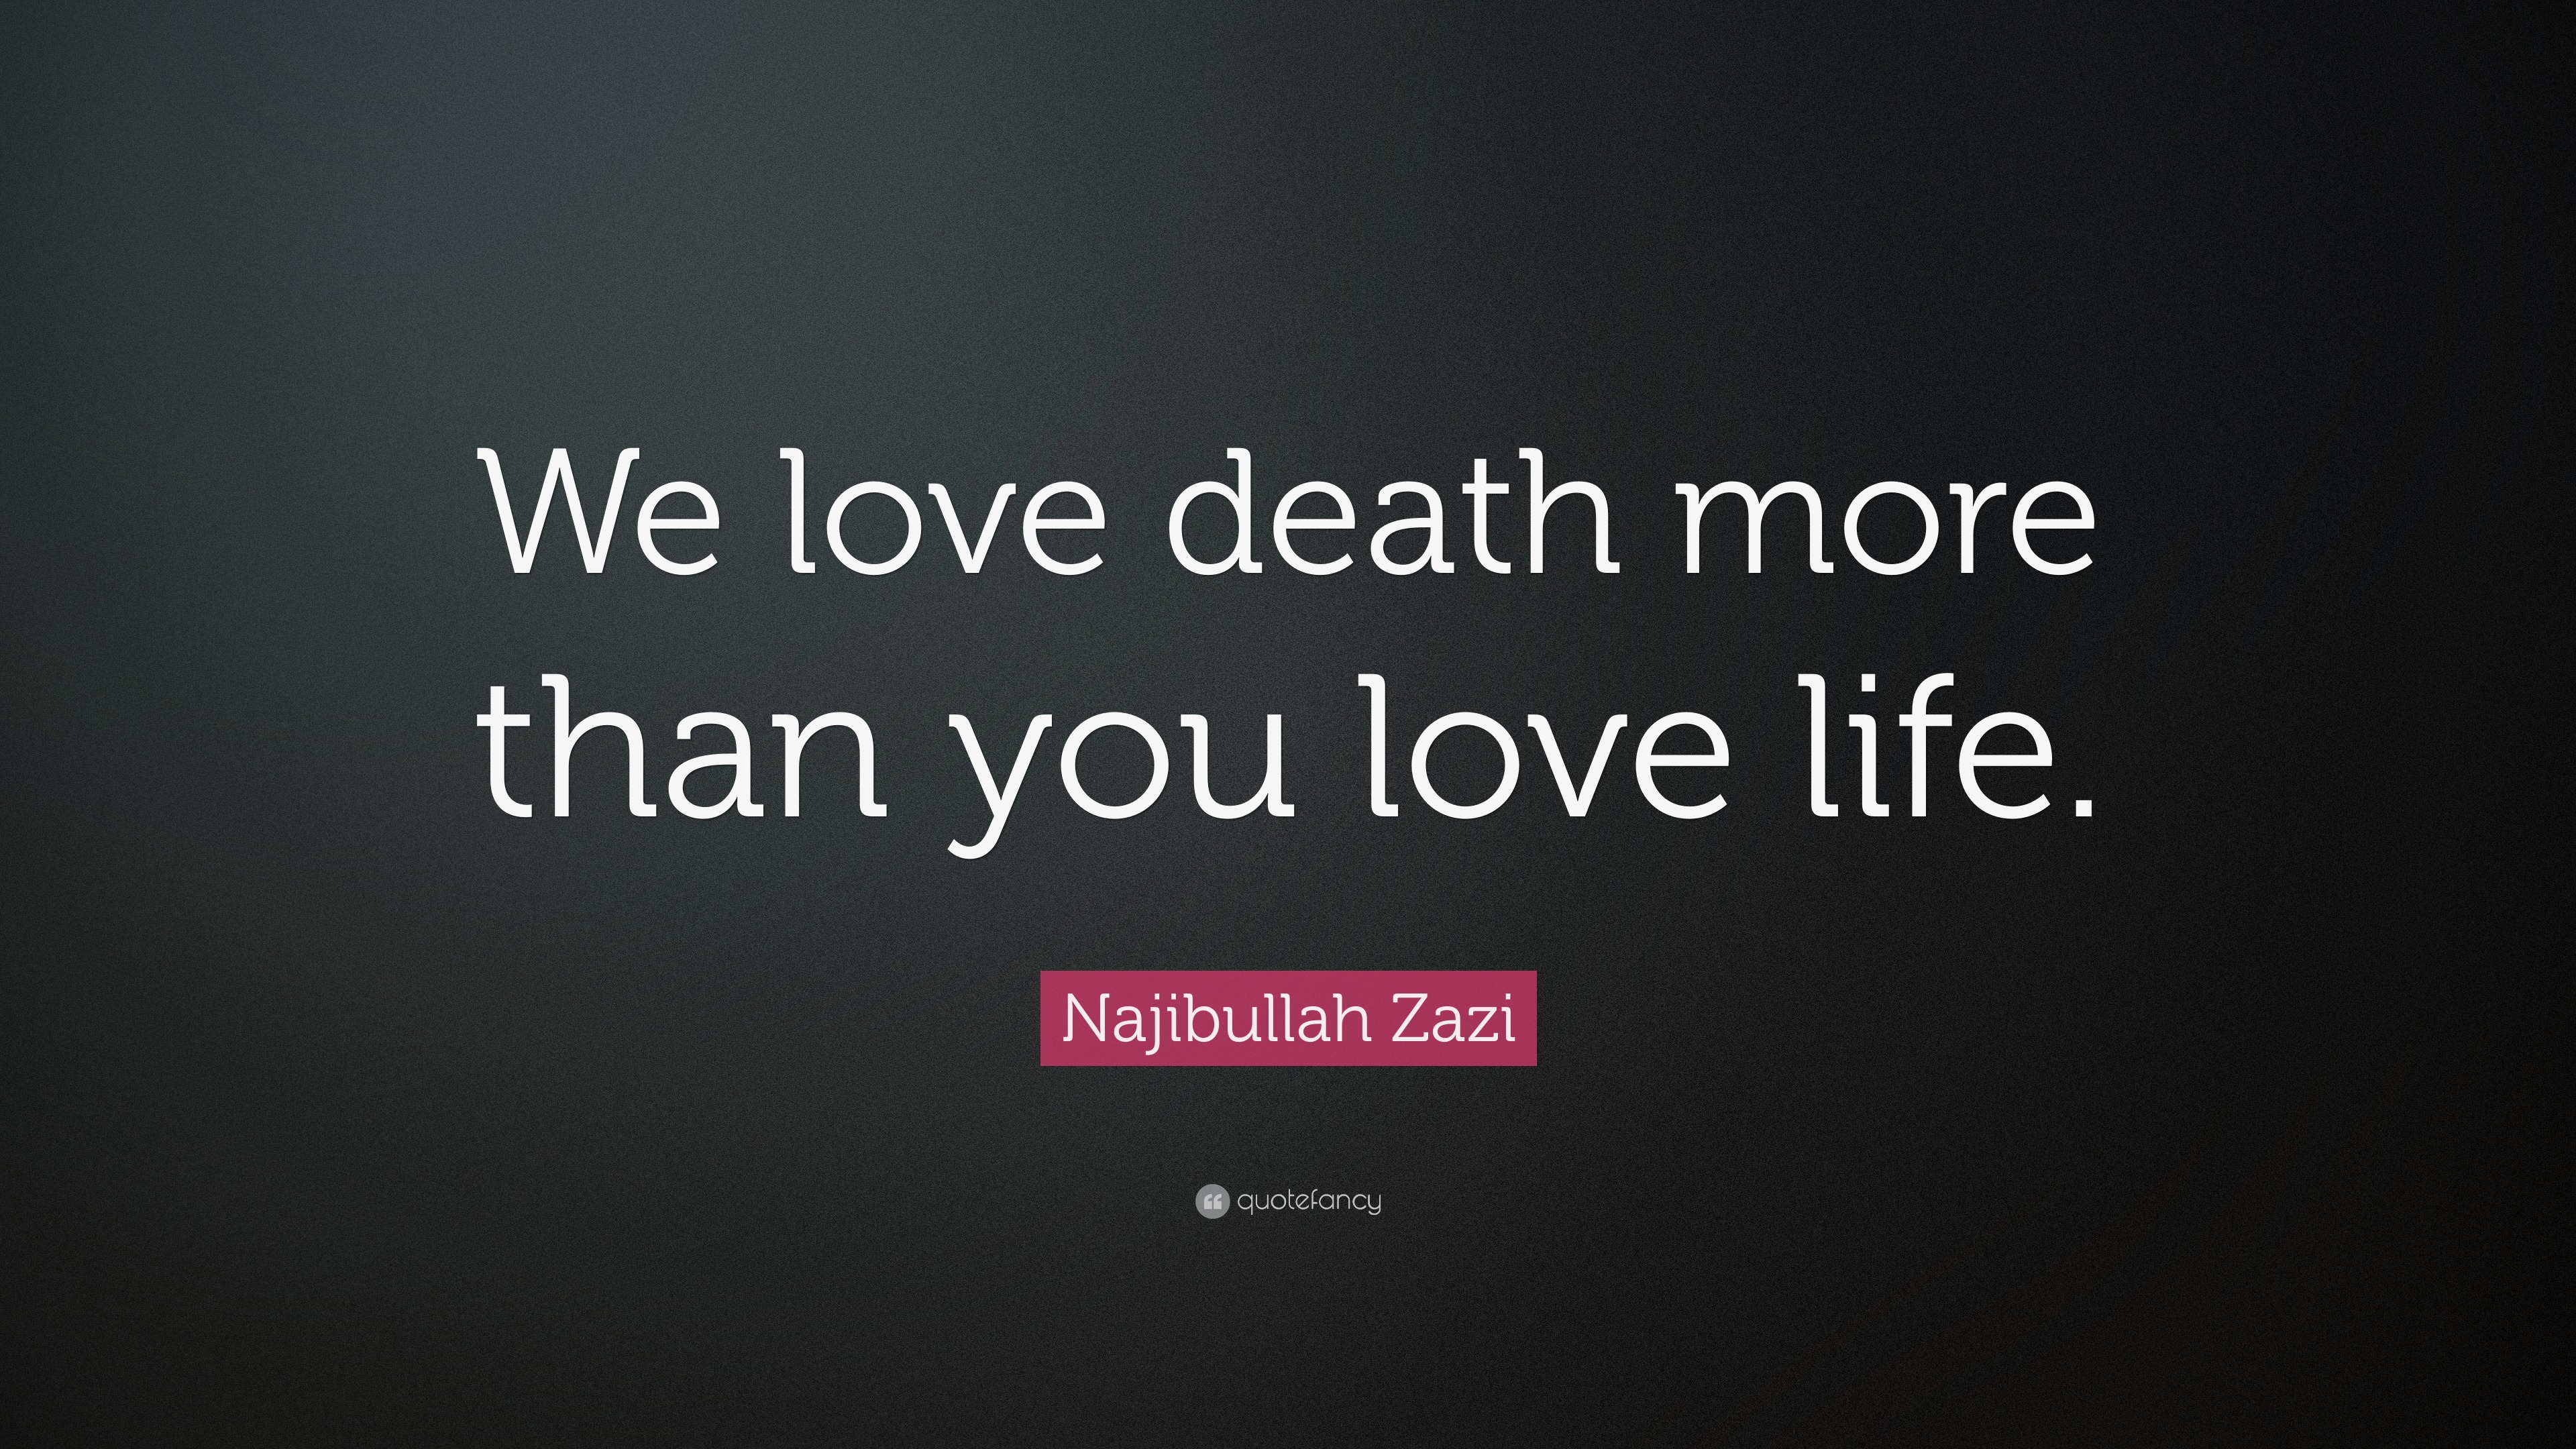 Najibullah Zazi Quote “We love more than you love life ”